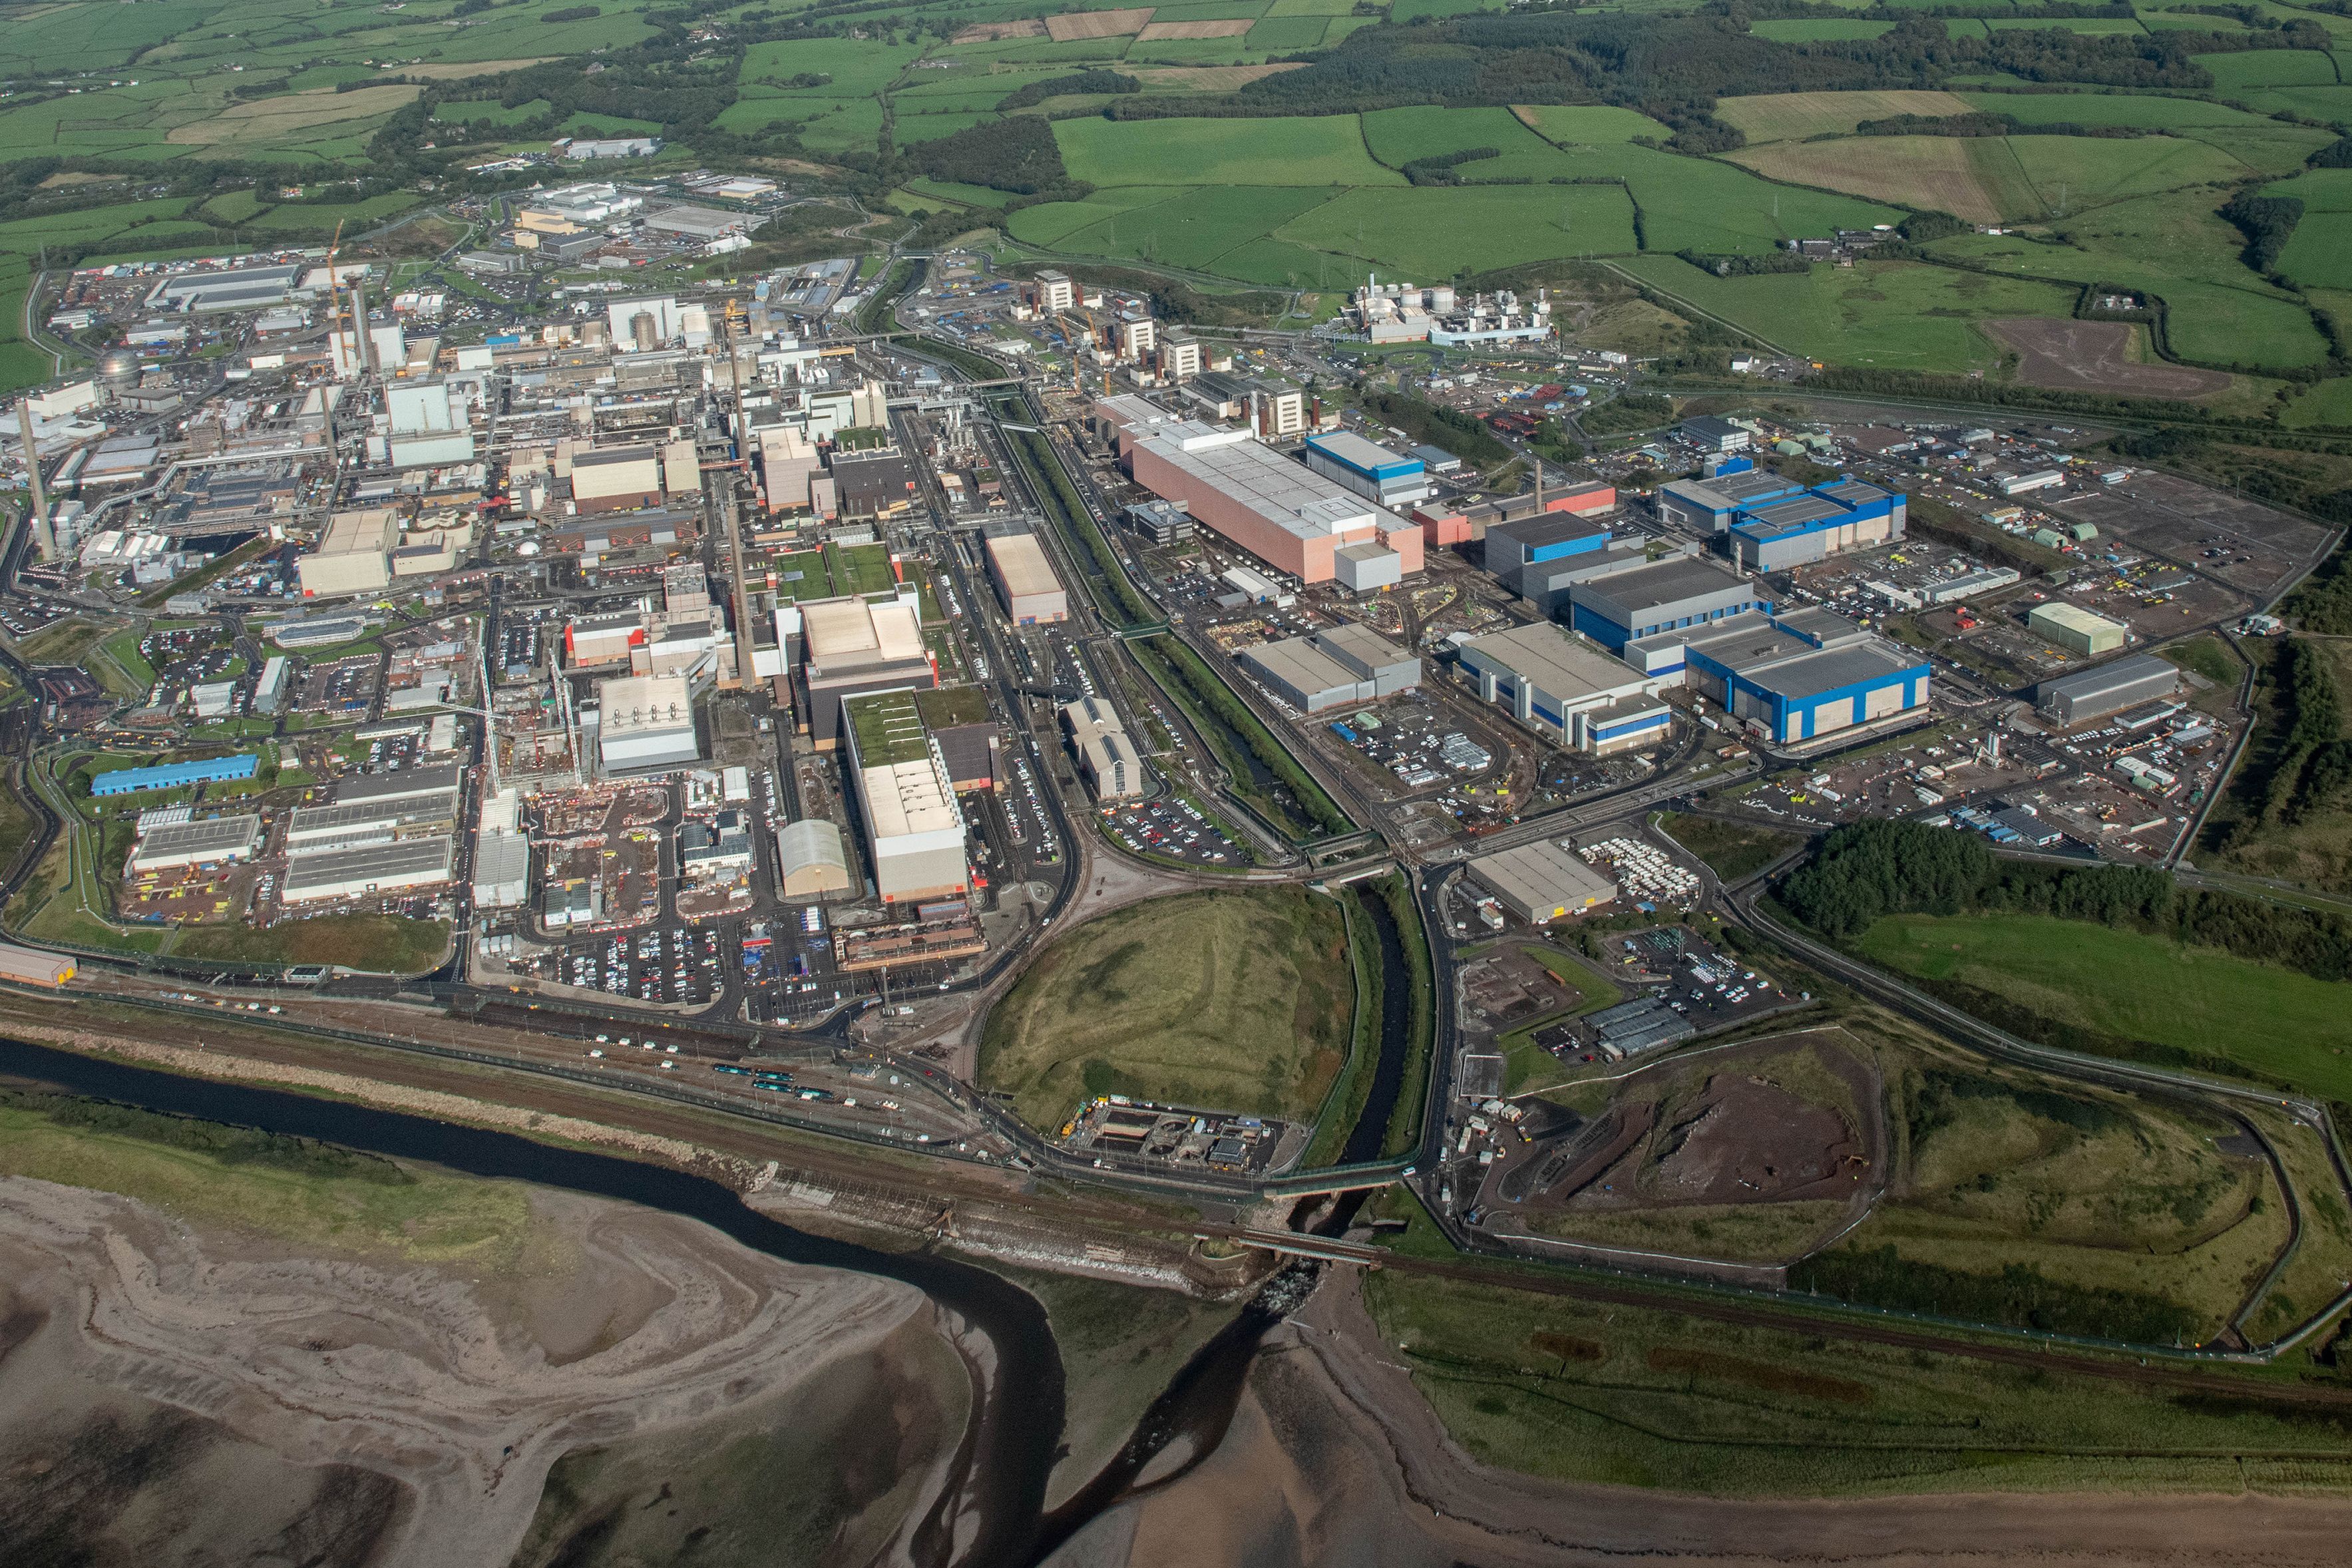  Image of the Sellafield site in Cumbria,UK